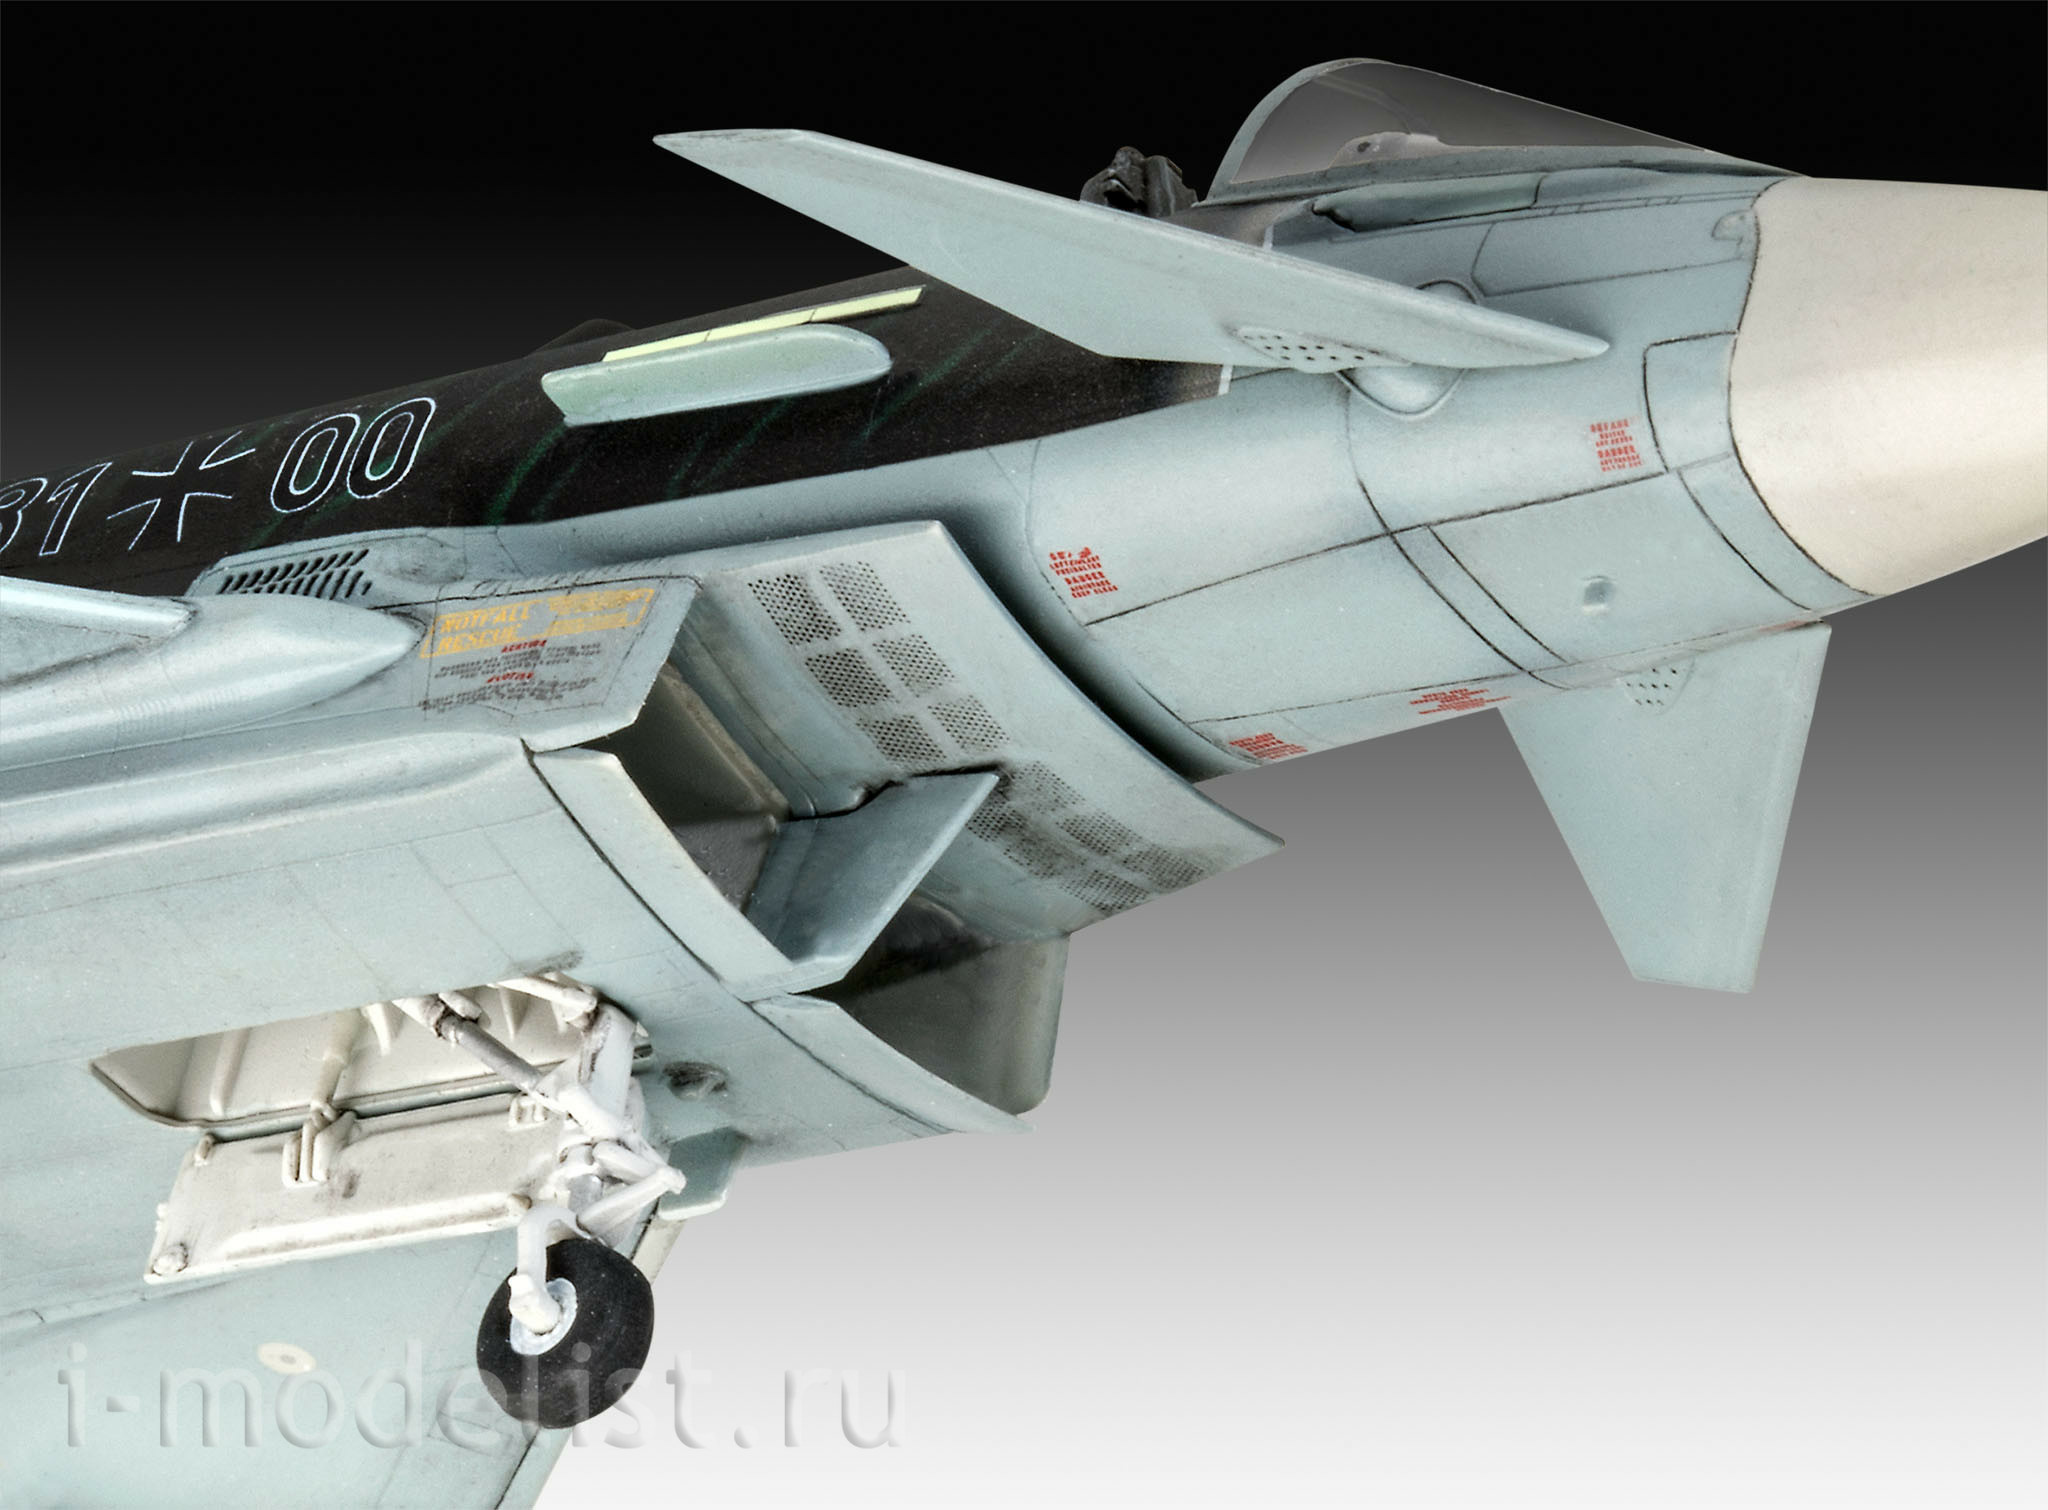 03884 Revell 1/72 multi-role fighter Eurofighter 